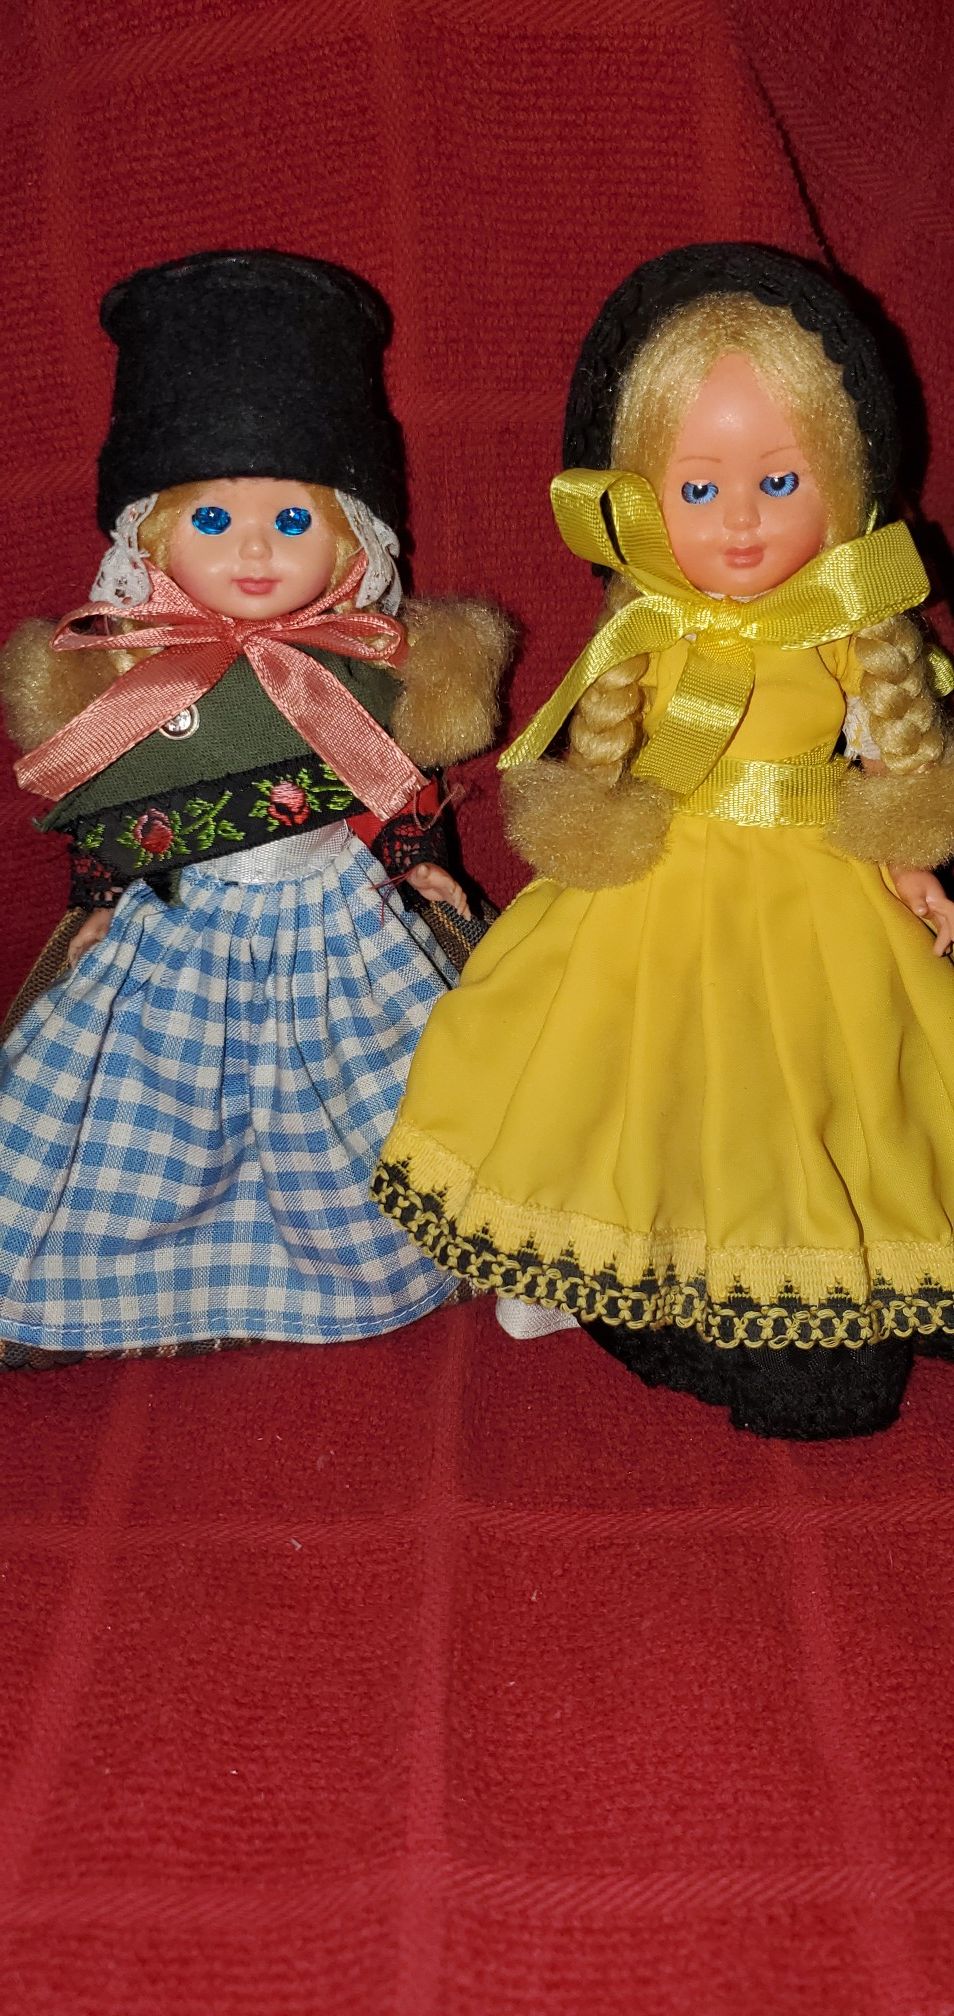 Cavicchi Dolls, made in Italy